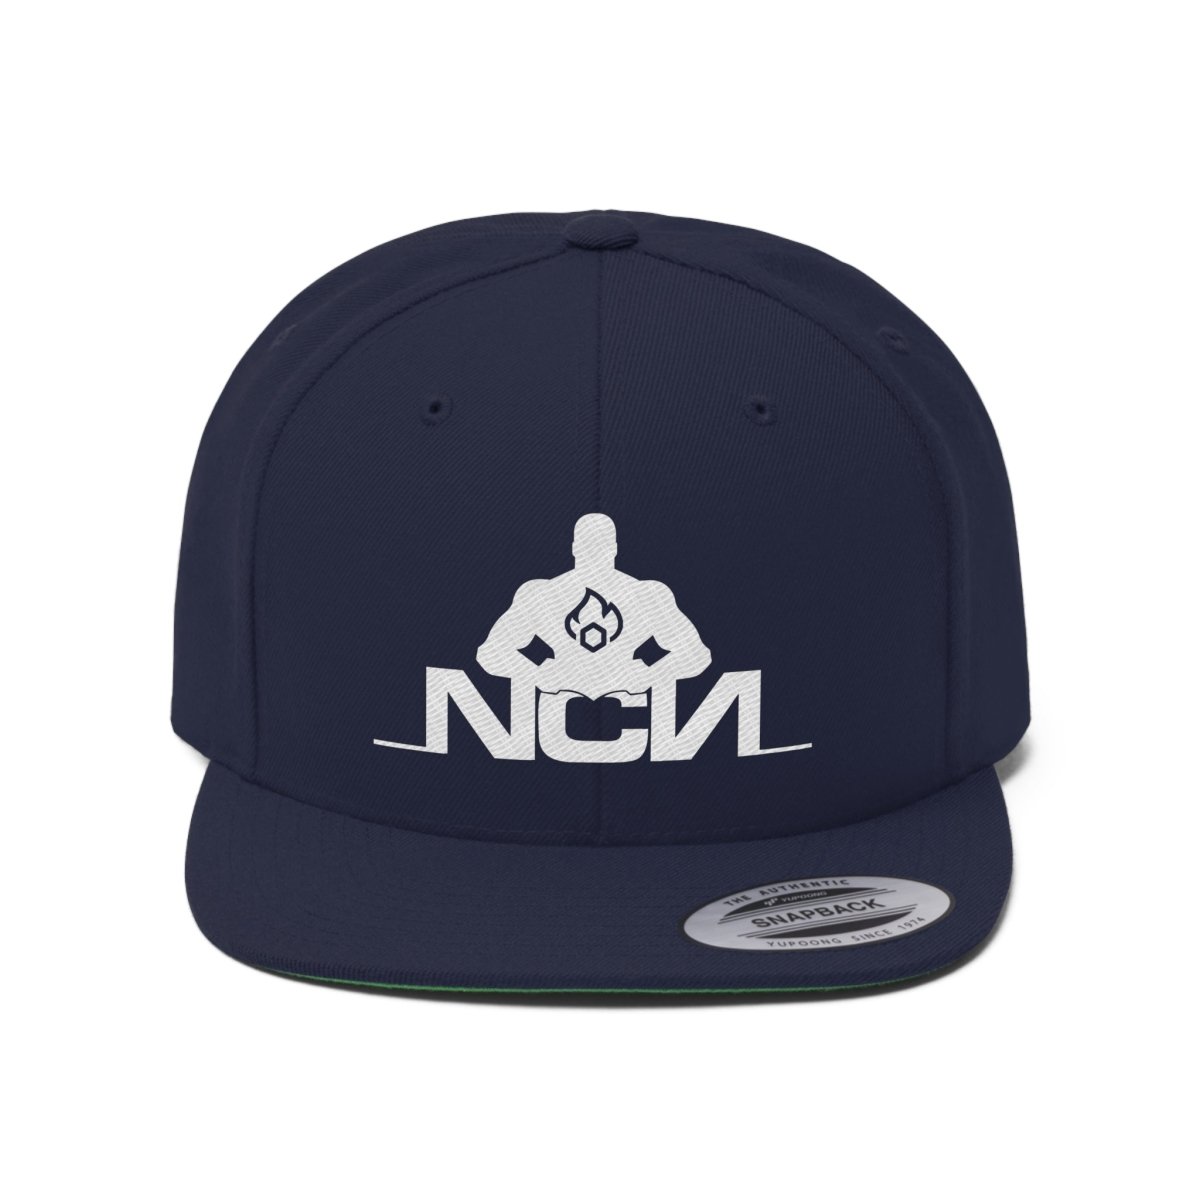 NCN Unisex Flat Bill Hat 